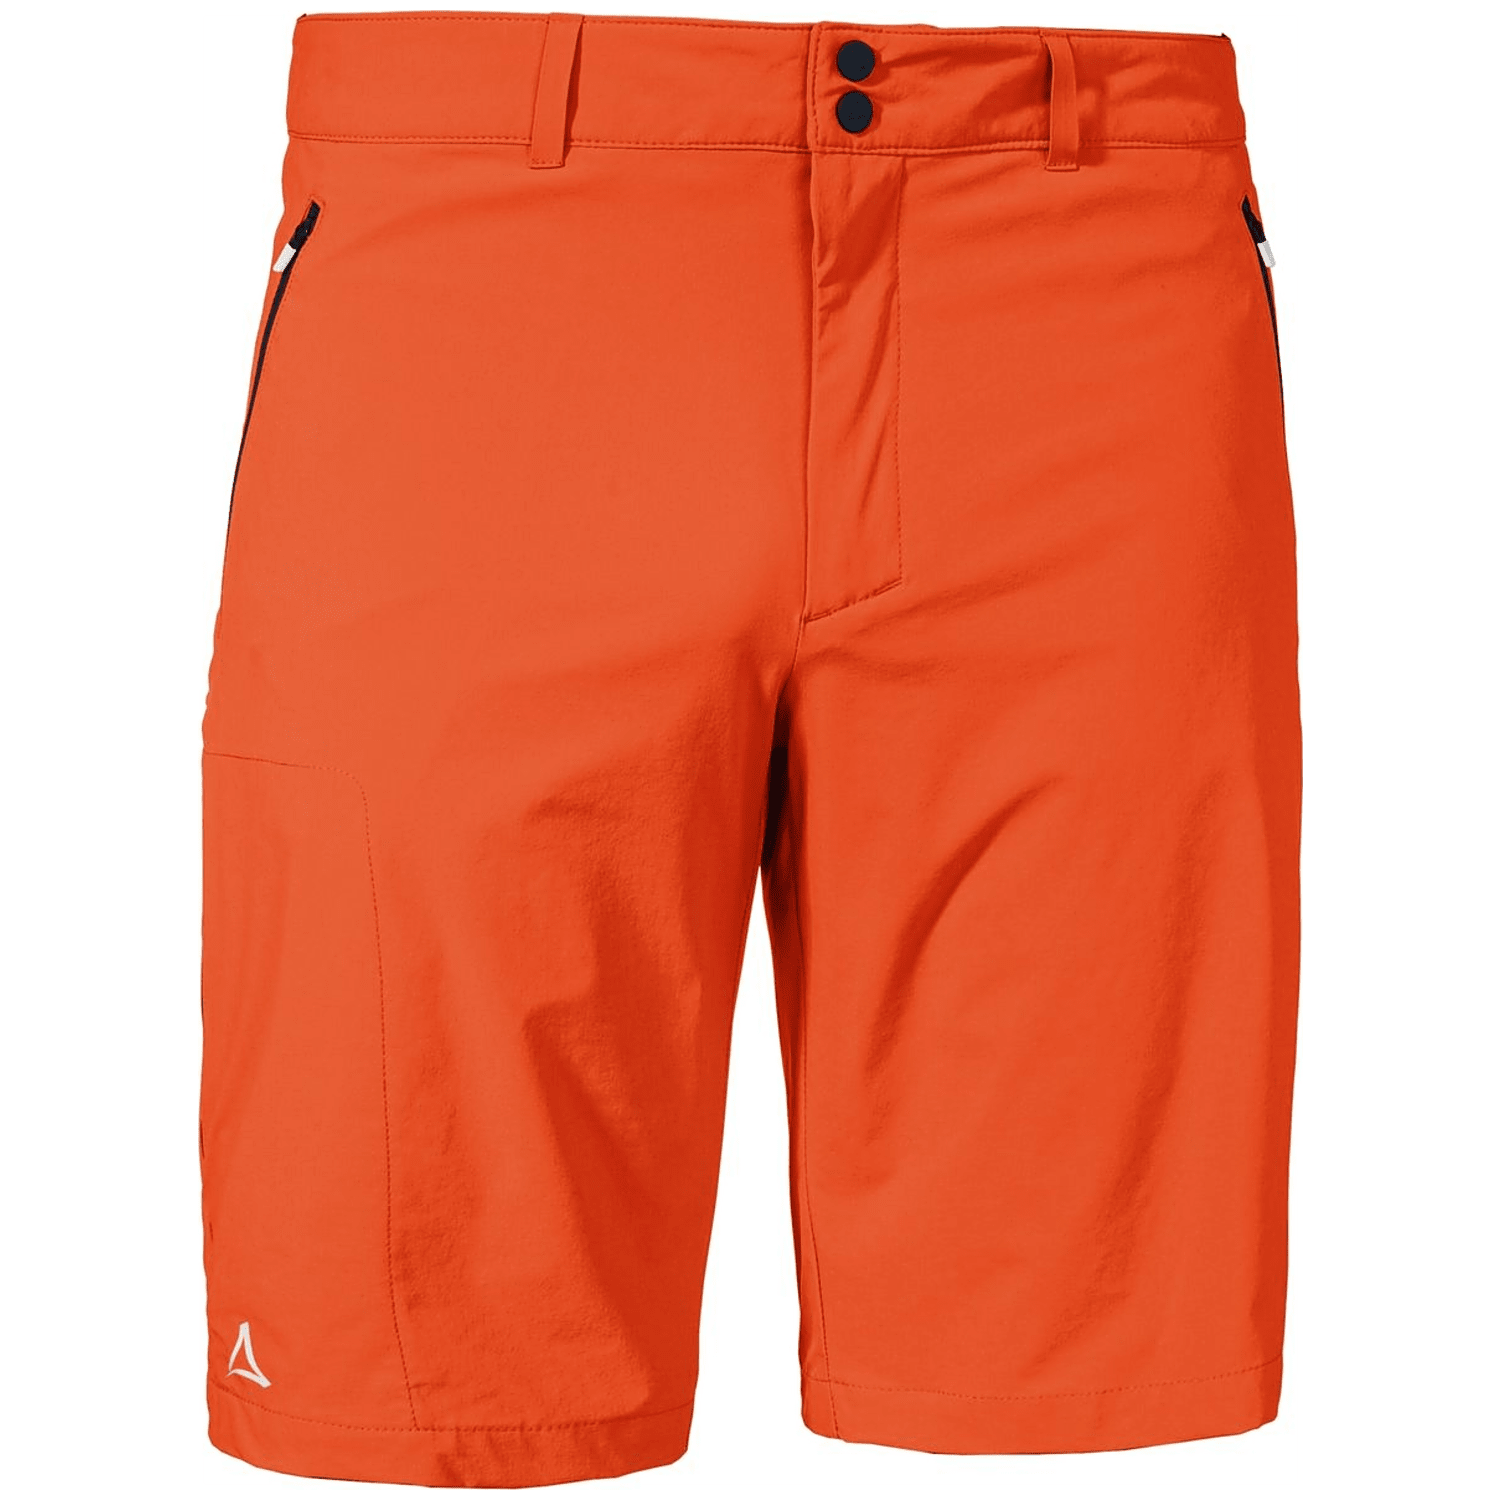 Schöffel Hestad Herren Bermuda Shorts